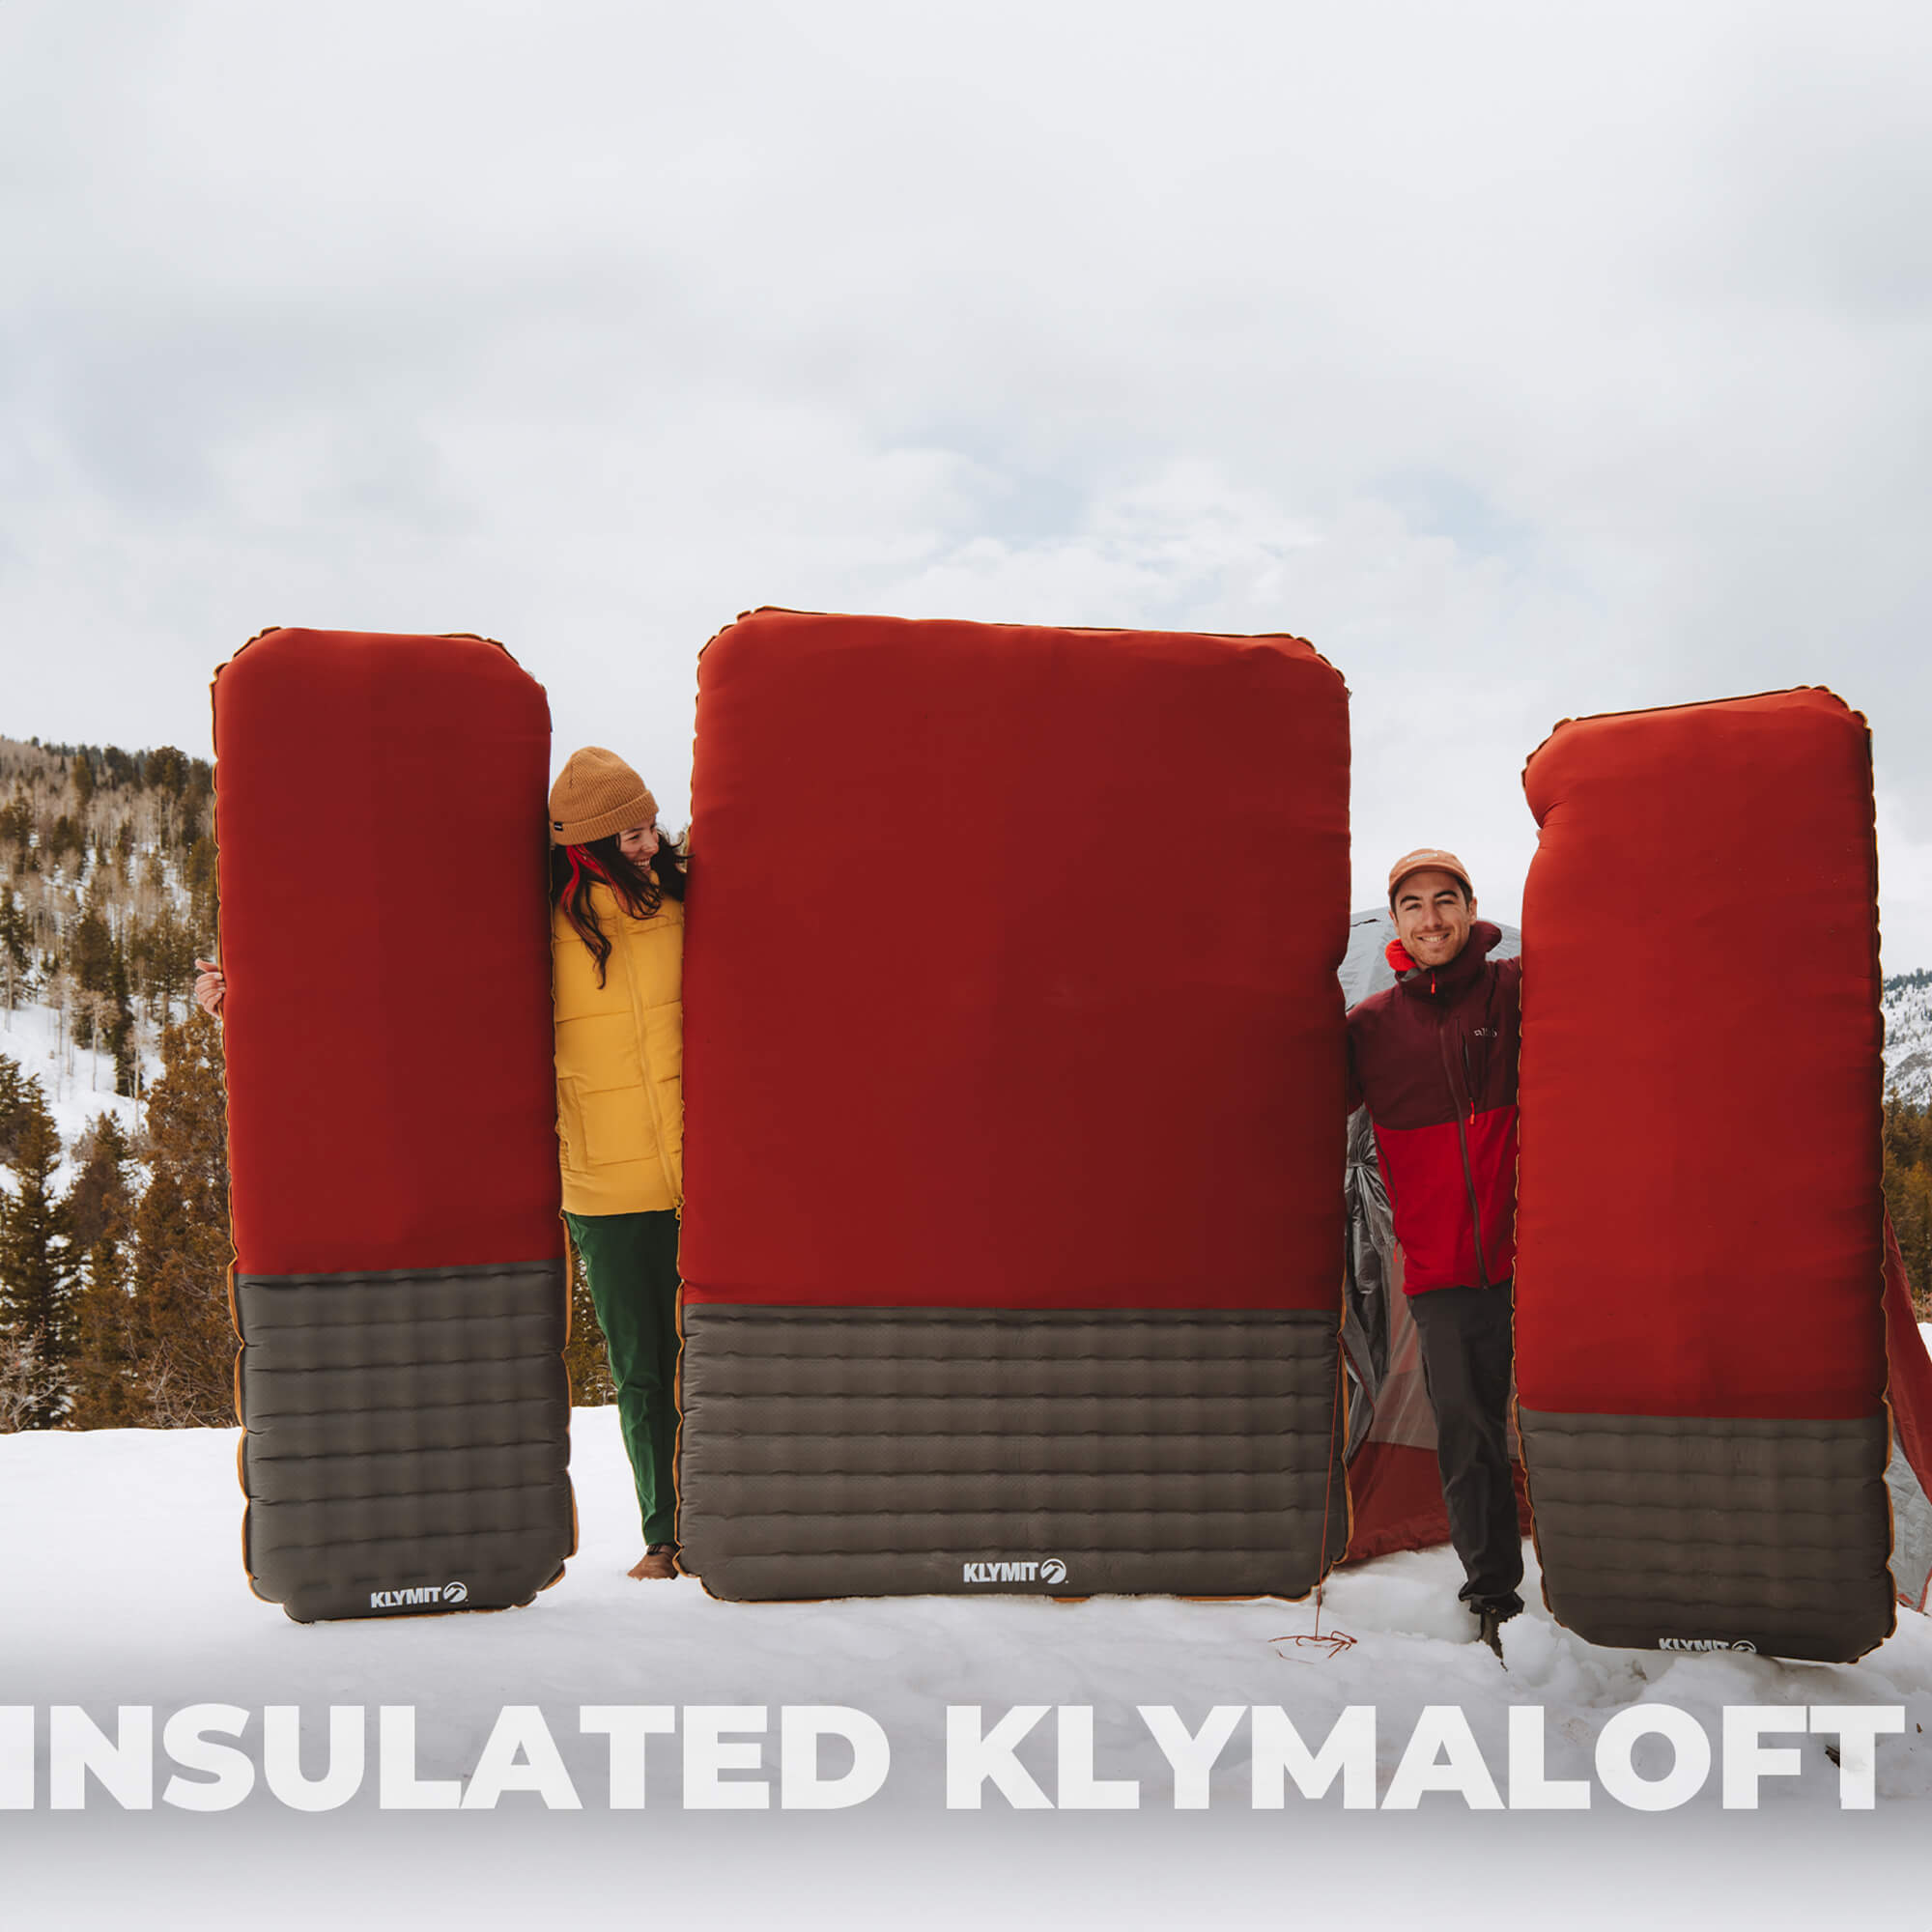 all-groups Insulated Klymaloft Sleeping Pad, Lifestyle Sleeping Pad Comparison